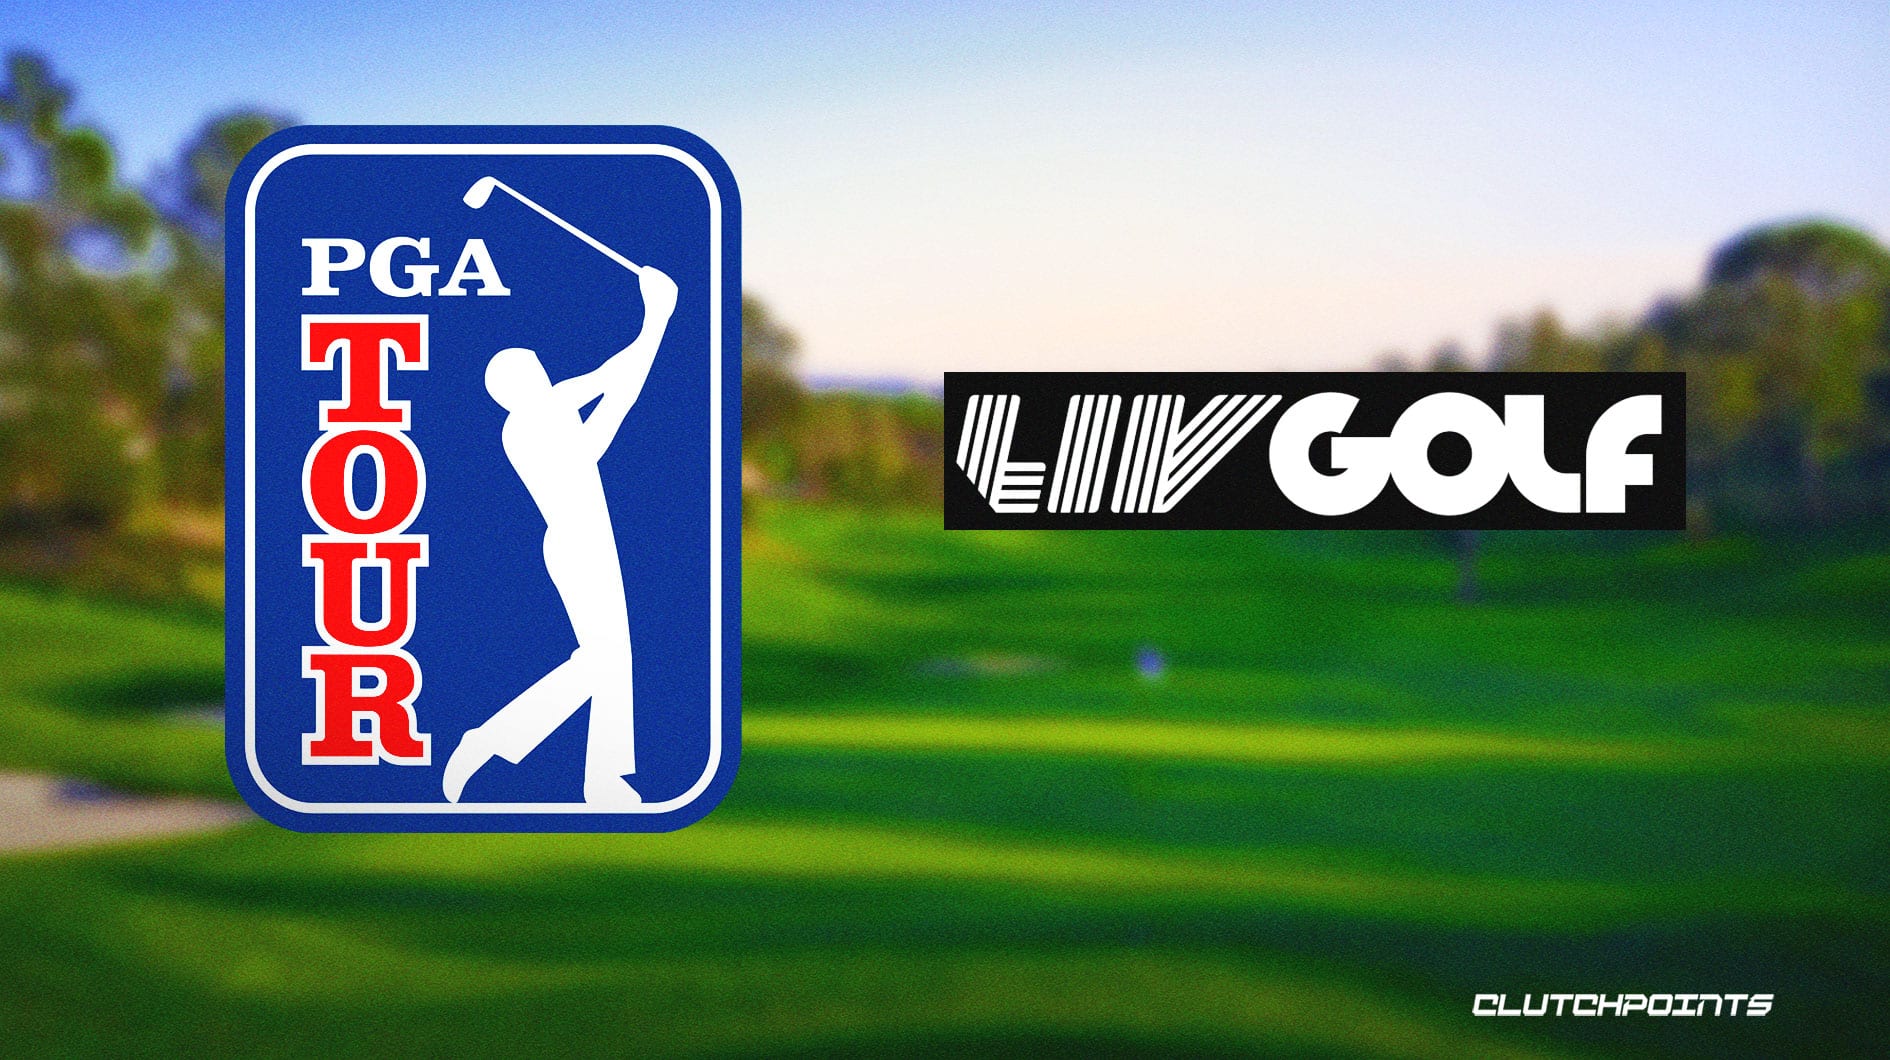 PGA Tour LIV Golf defectors will be back harshly